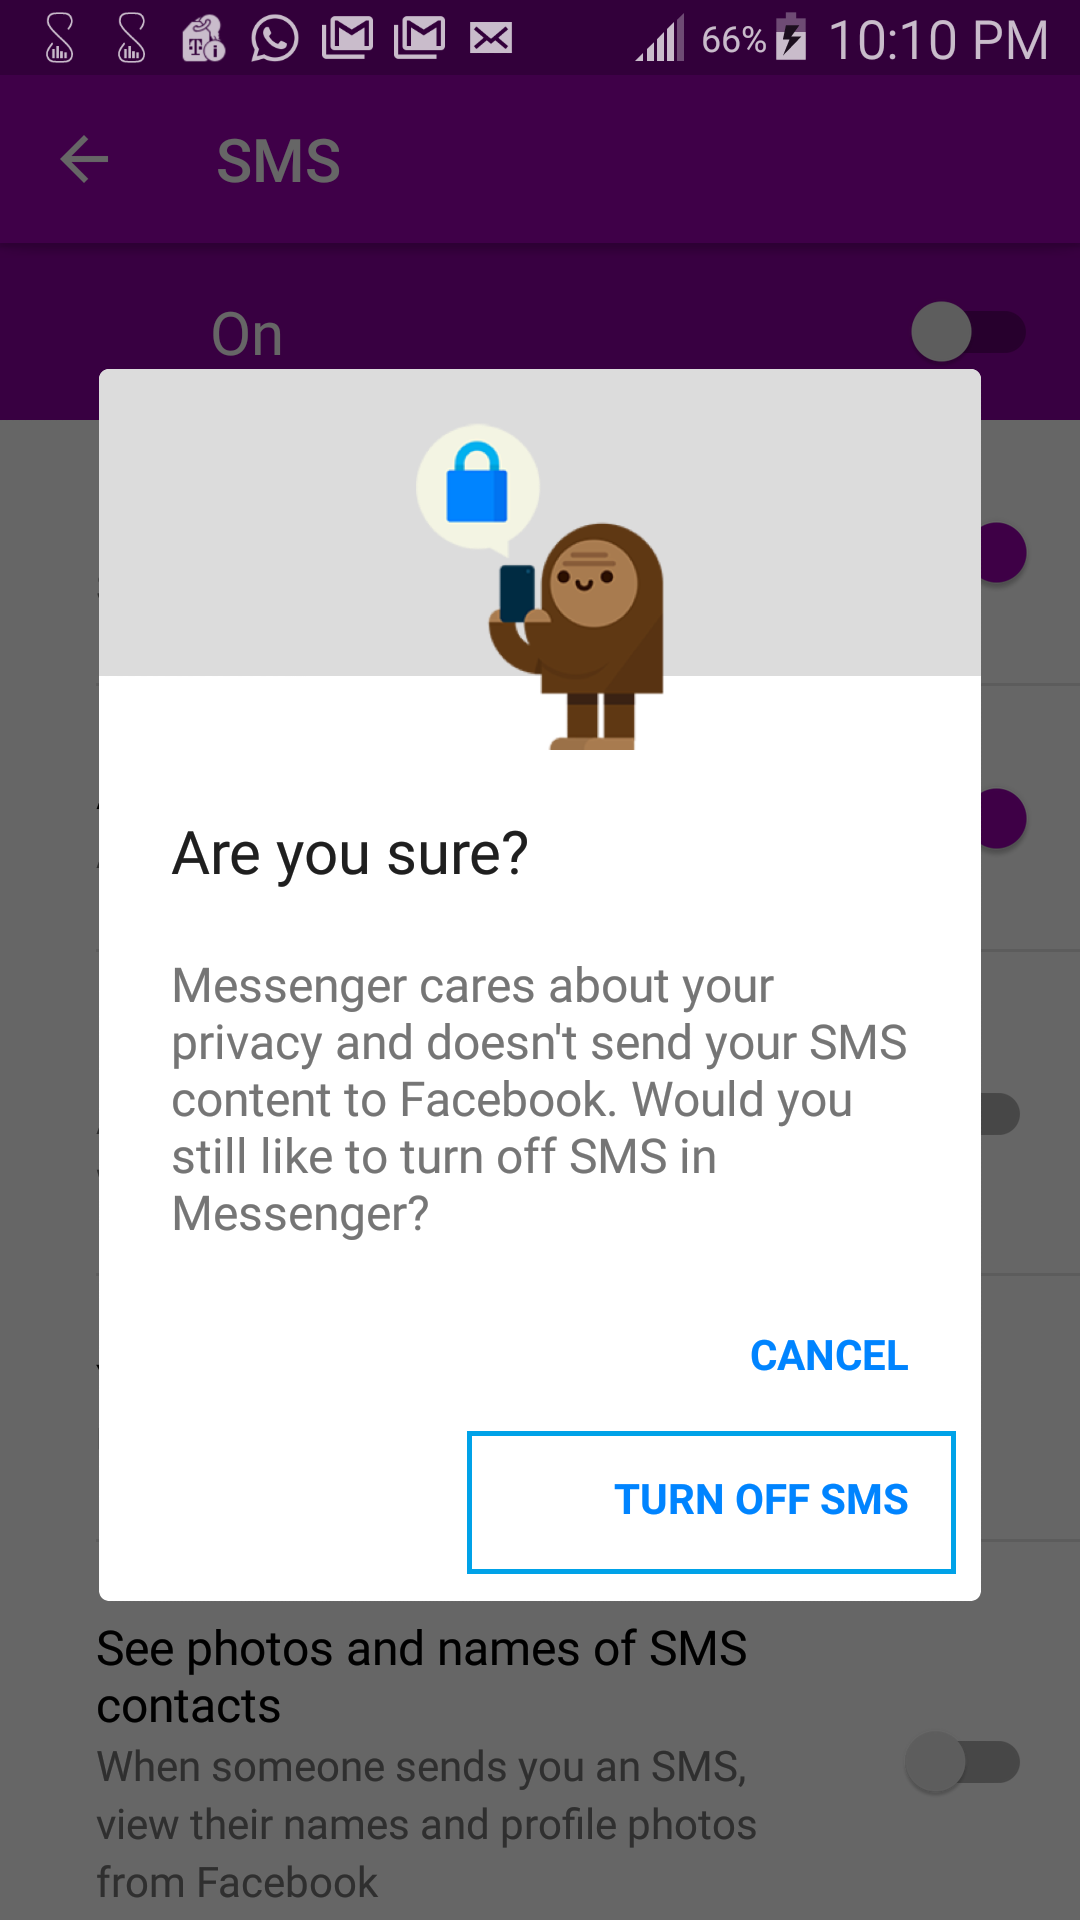  turn off Messenger as default sms app